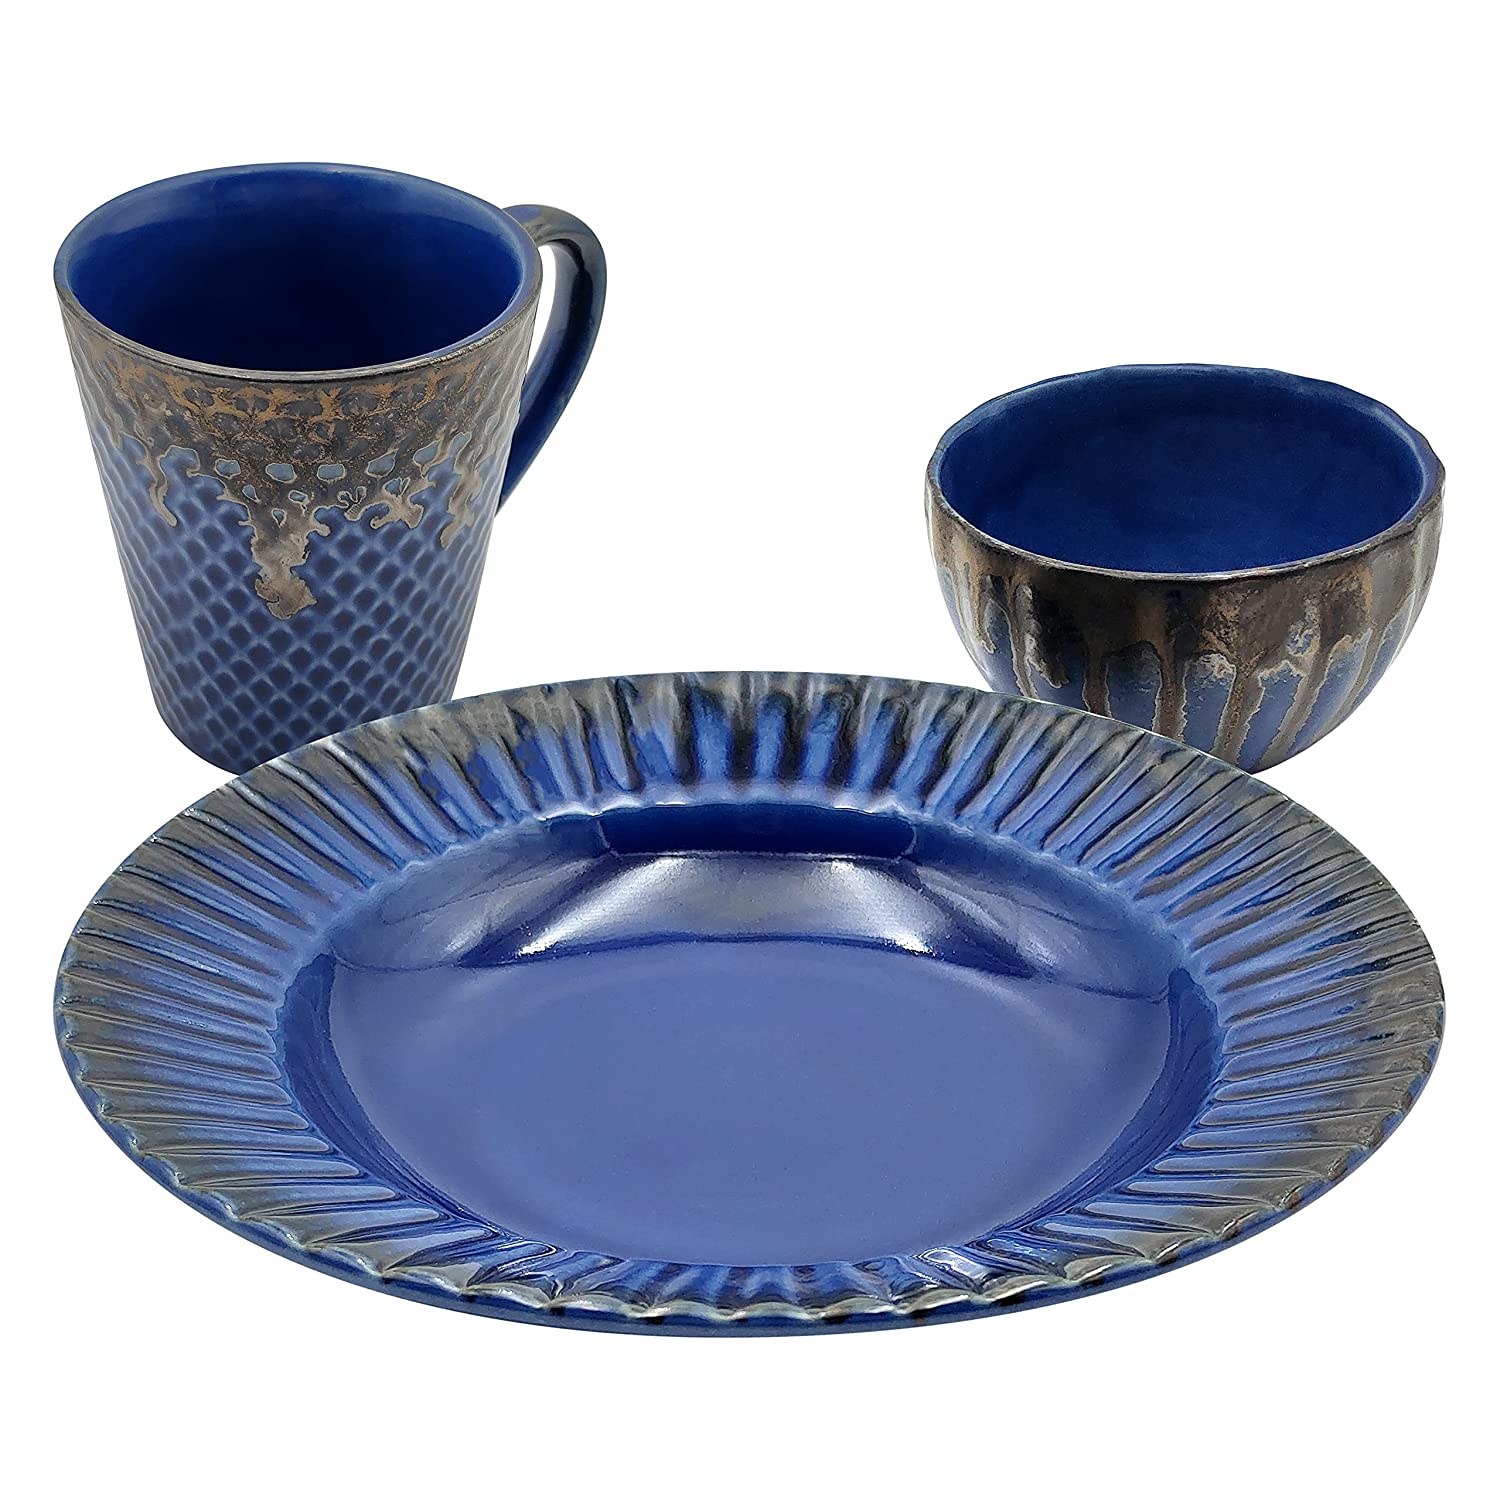 Ceramic Breakfast Set - Plate, Bowl and Mug